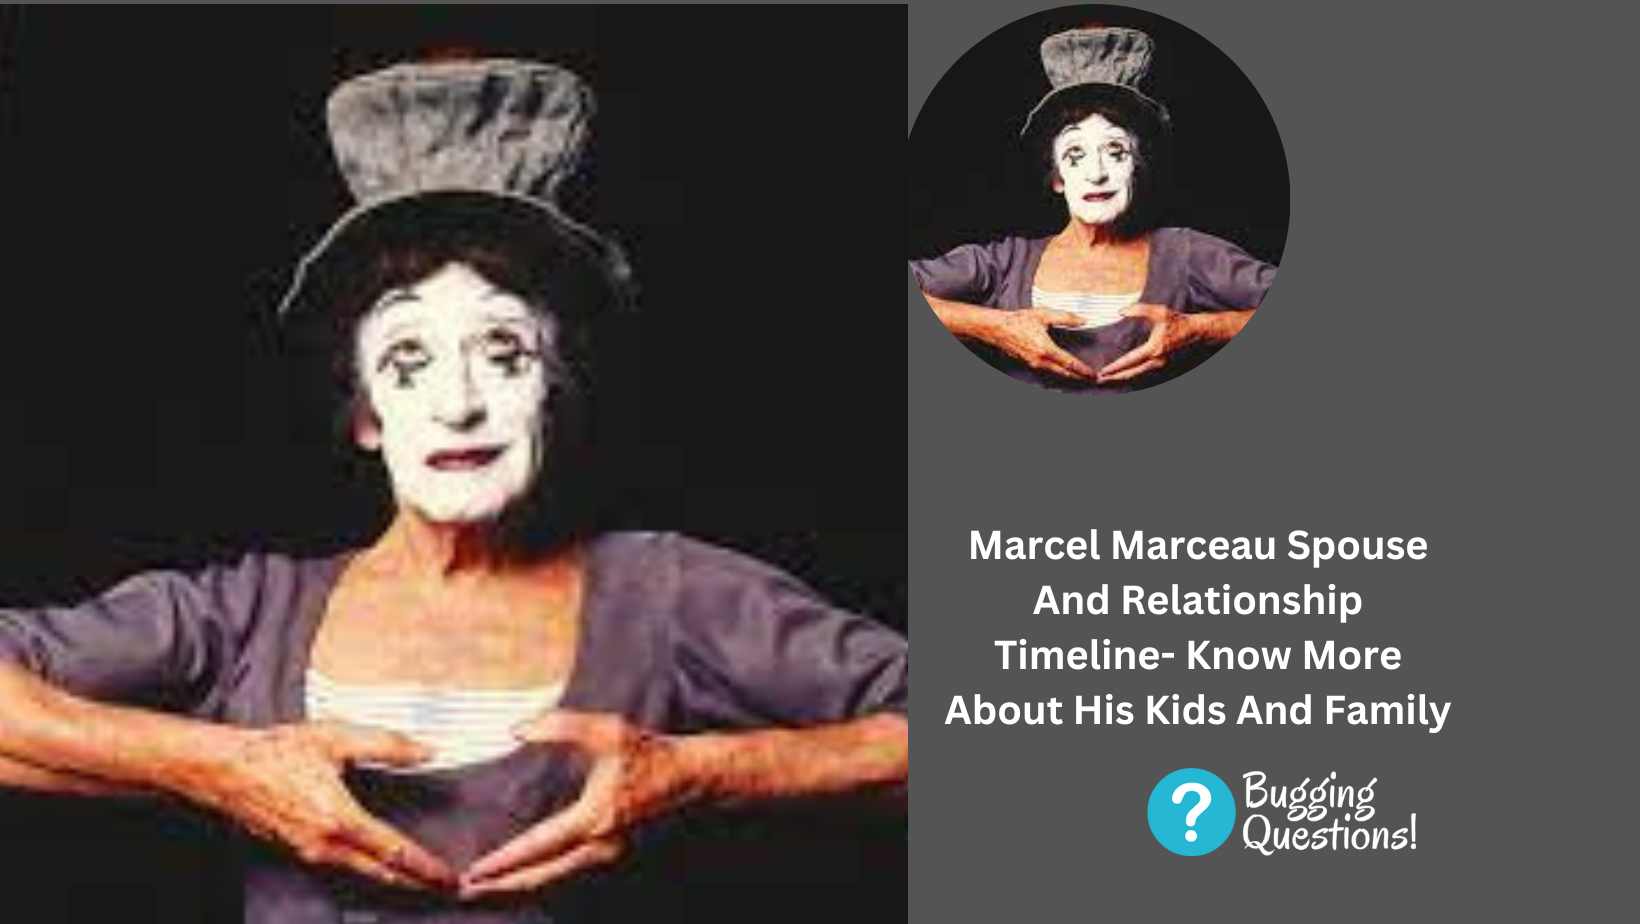 Marcel Marceau Spouse And Relationship Timeline